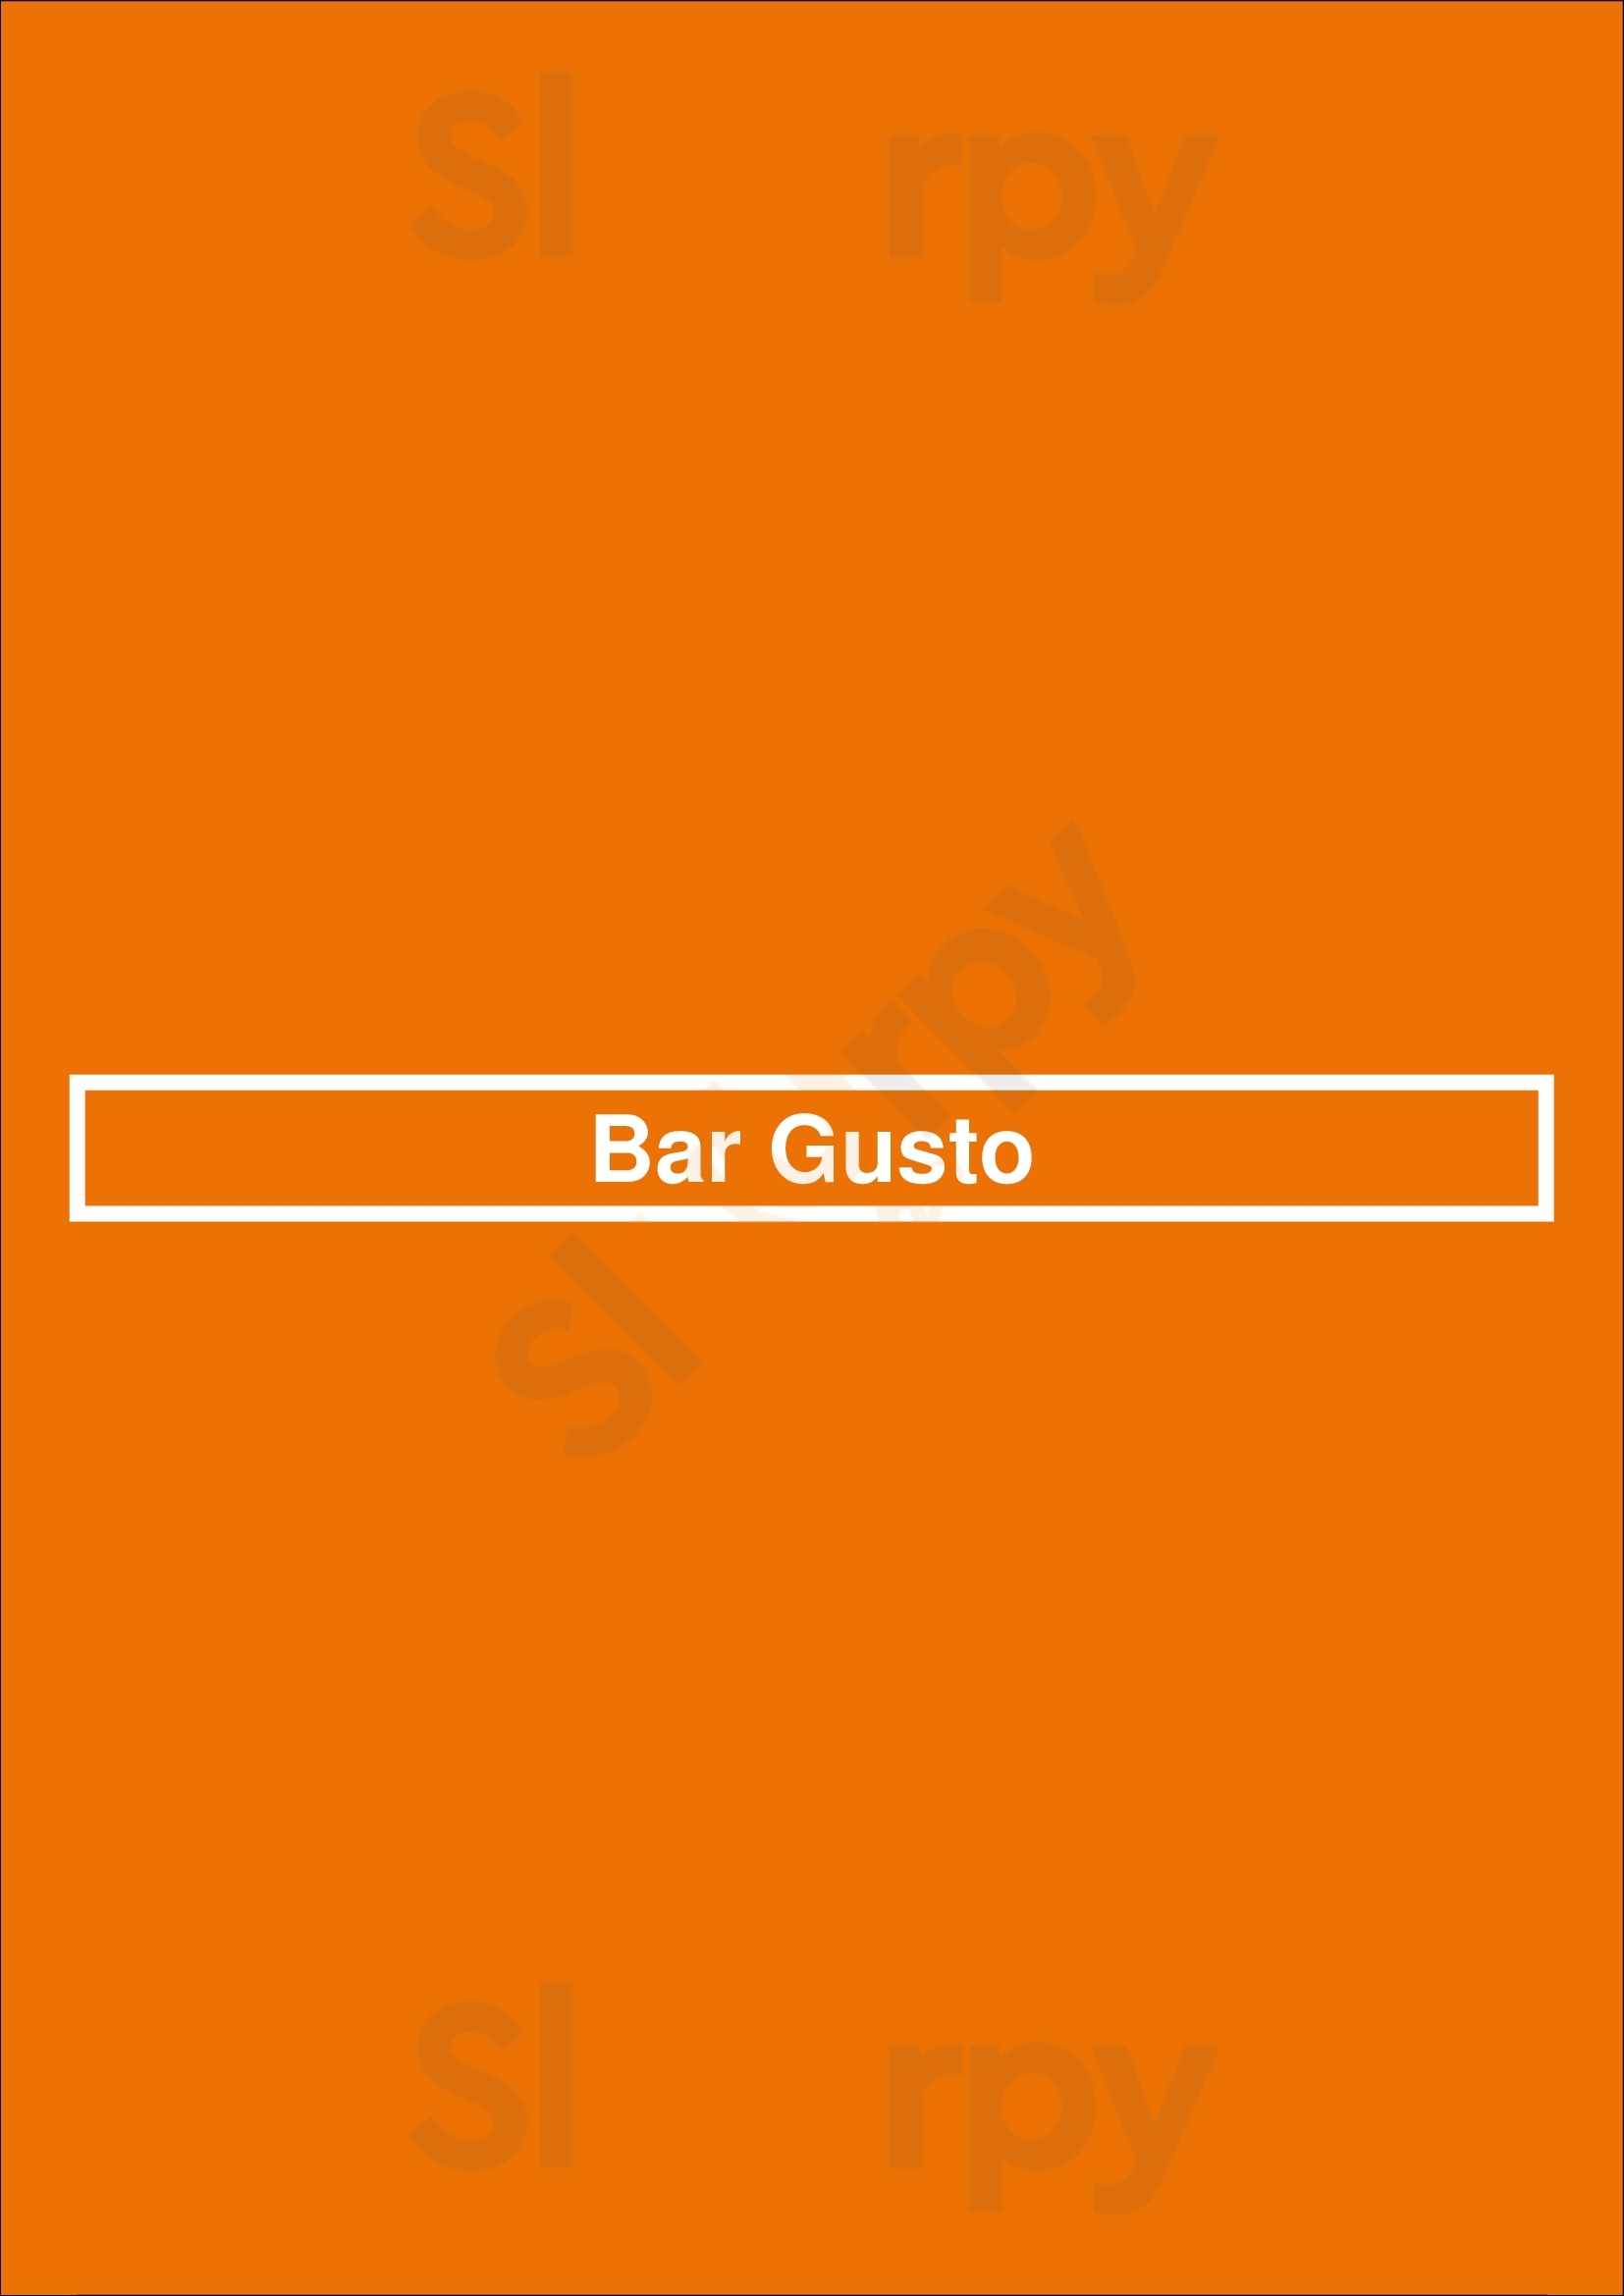 Bar Gusto Saskatoon Menu - 1